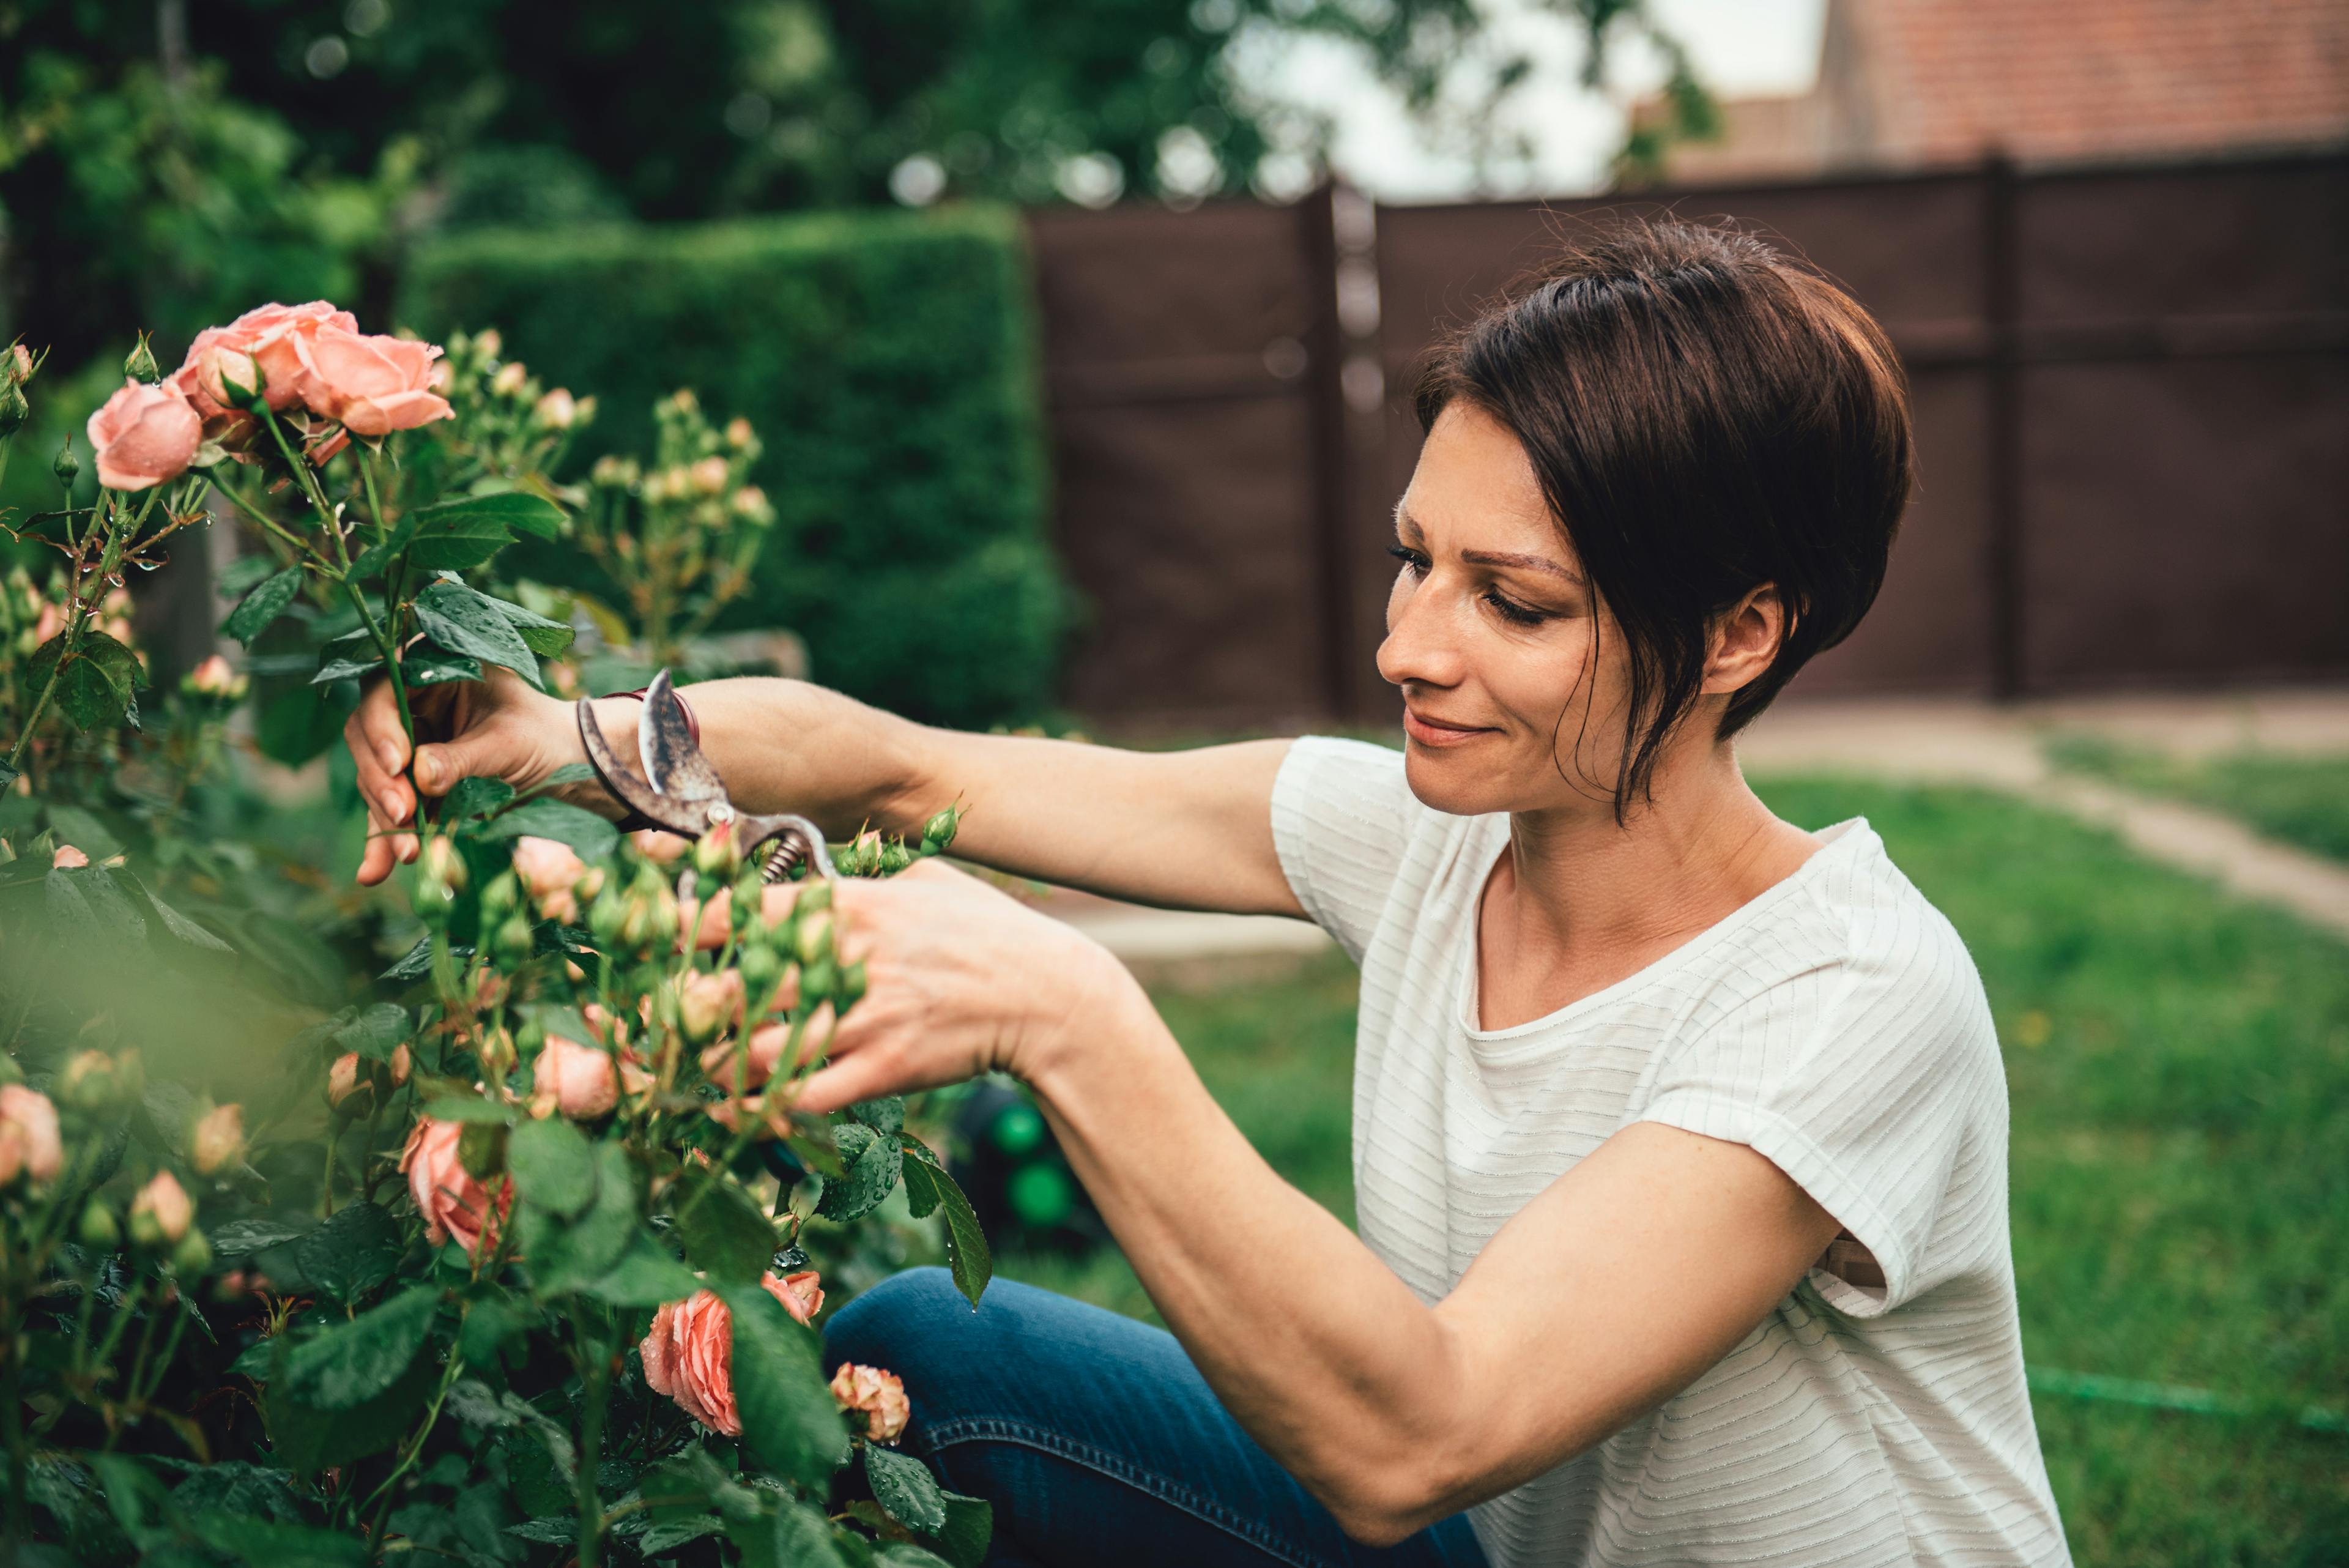 Woman wearing white shirt smiling and pruning roses in the backyard garden